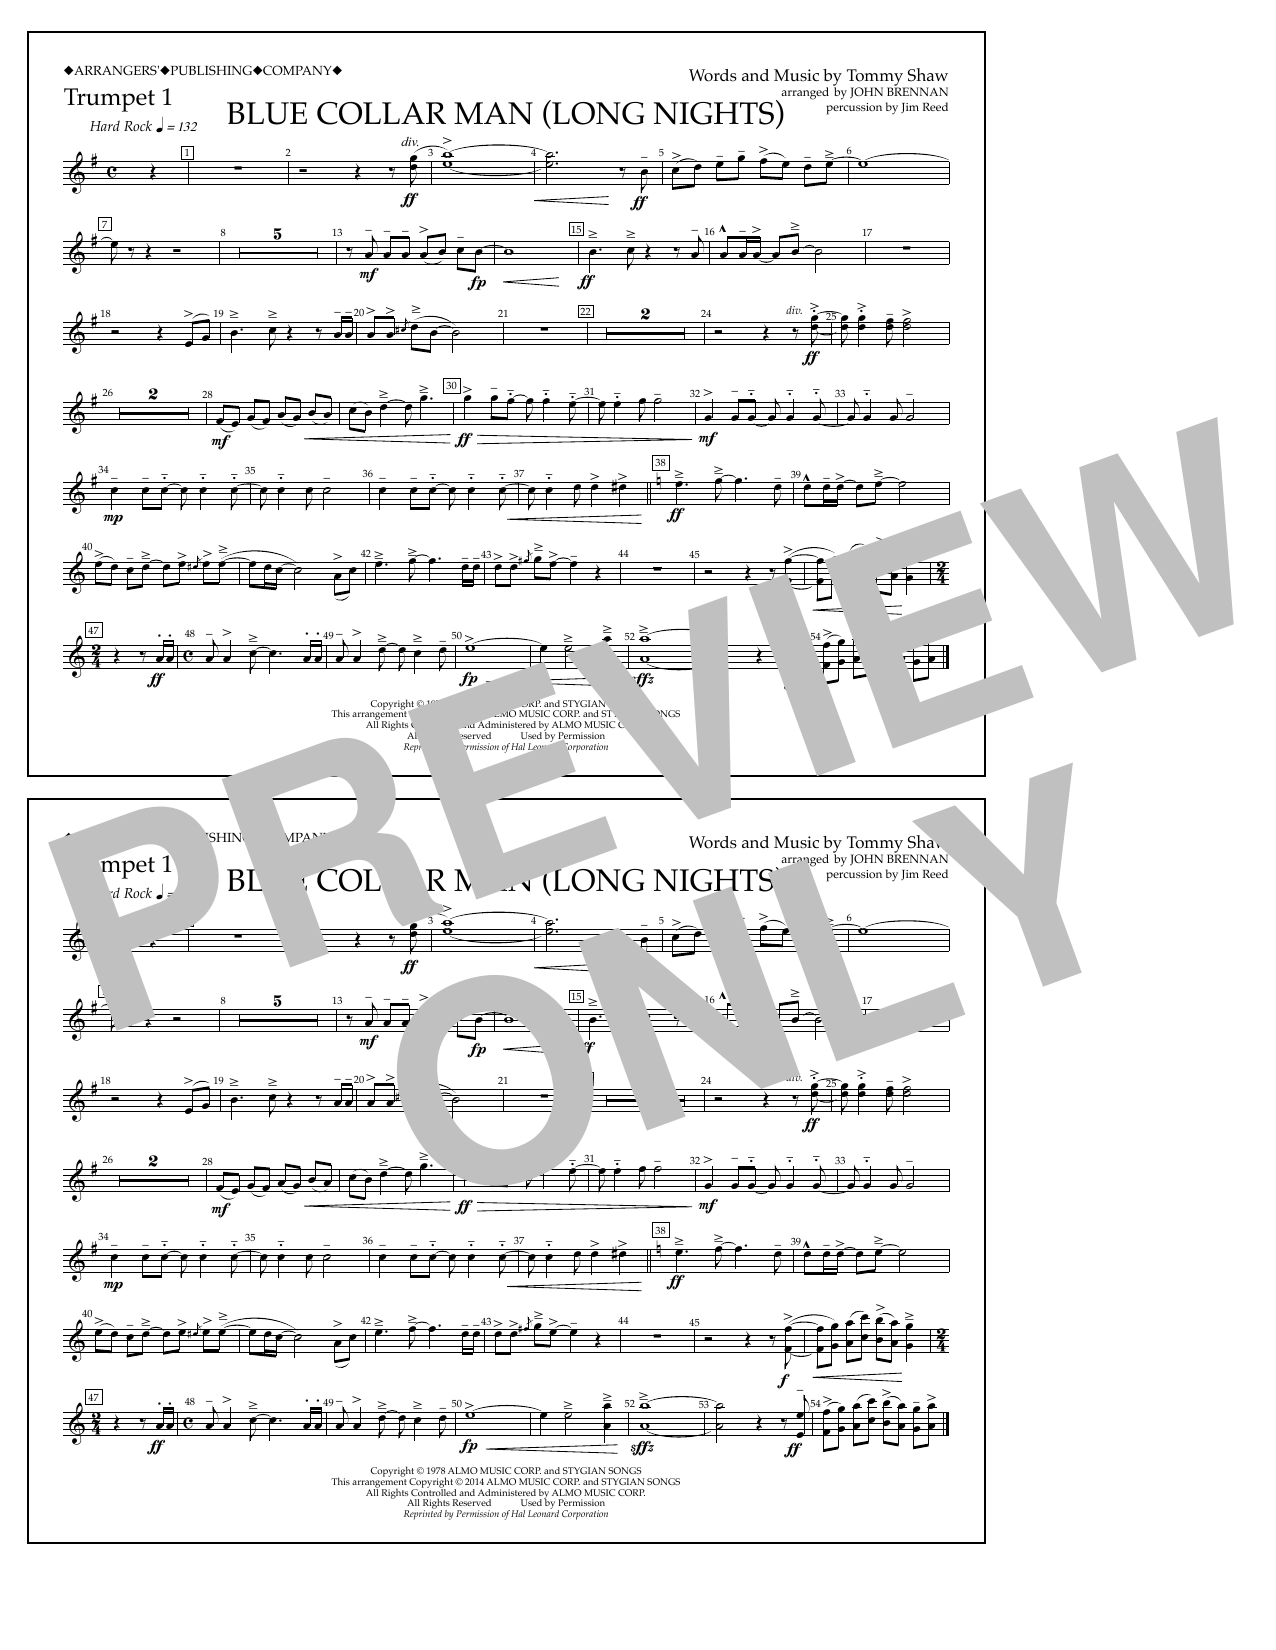 John Brennan Blue Collar Man (Long Nights) - Trumpet 1 Sheet Music Notes & Chords for Marching Band - Download or Print PDF